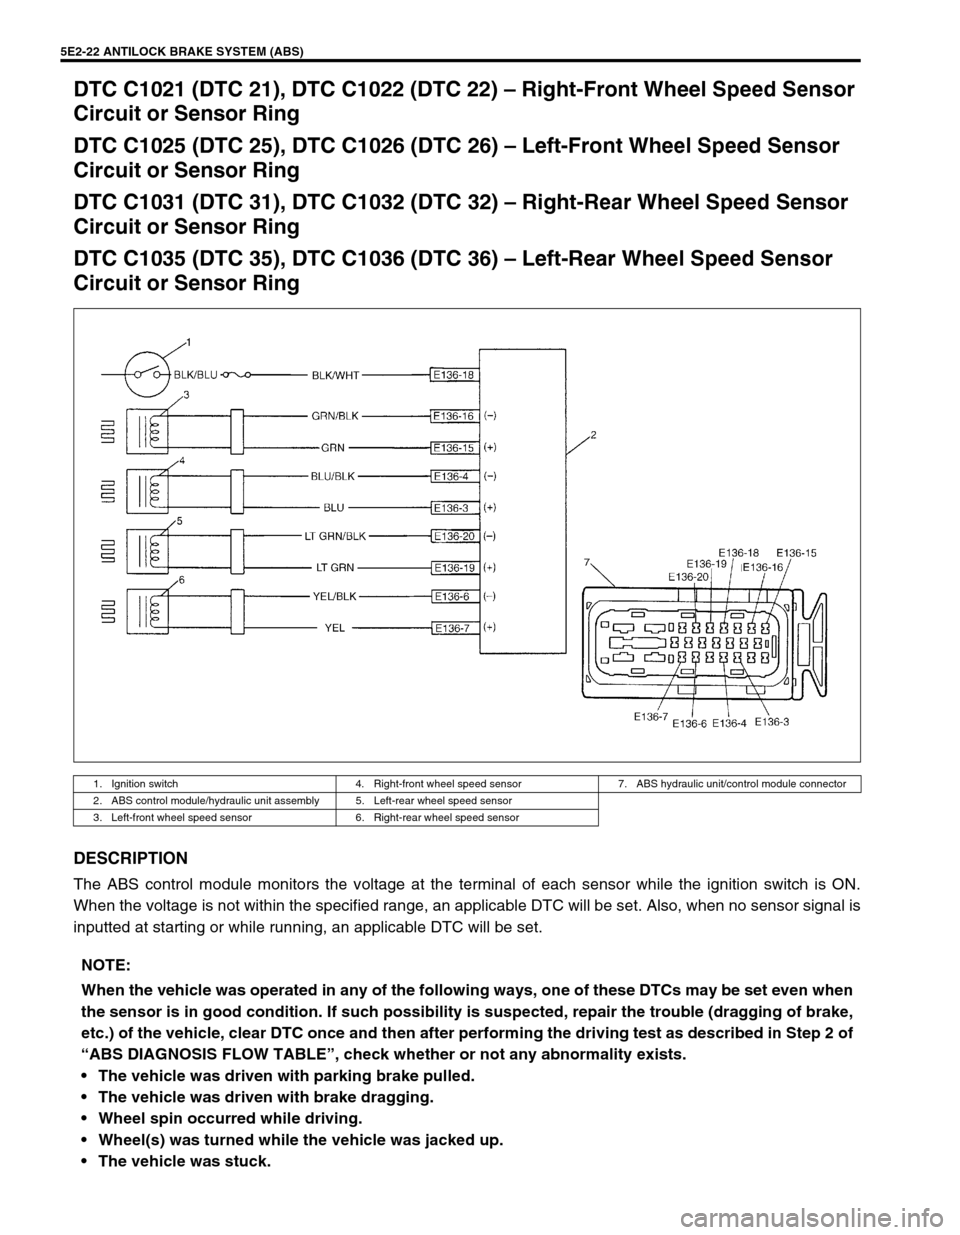 SUZUKI GRAND VITARA 2001 2.G Owners Manual 5E2-22 ANTILOCK BRAKE SYSTEM (ABS)
DTC C1021 (DTC 21), DTC C1022 (DTC 22) – Right-Front Wheel Speed Sensor 
Circuit or Sensor Ring
DTC C1025 (DTC 25), DTC C1026 (DTC 26) – Left-Front Wheel Speed S